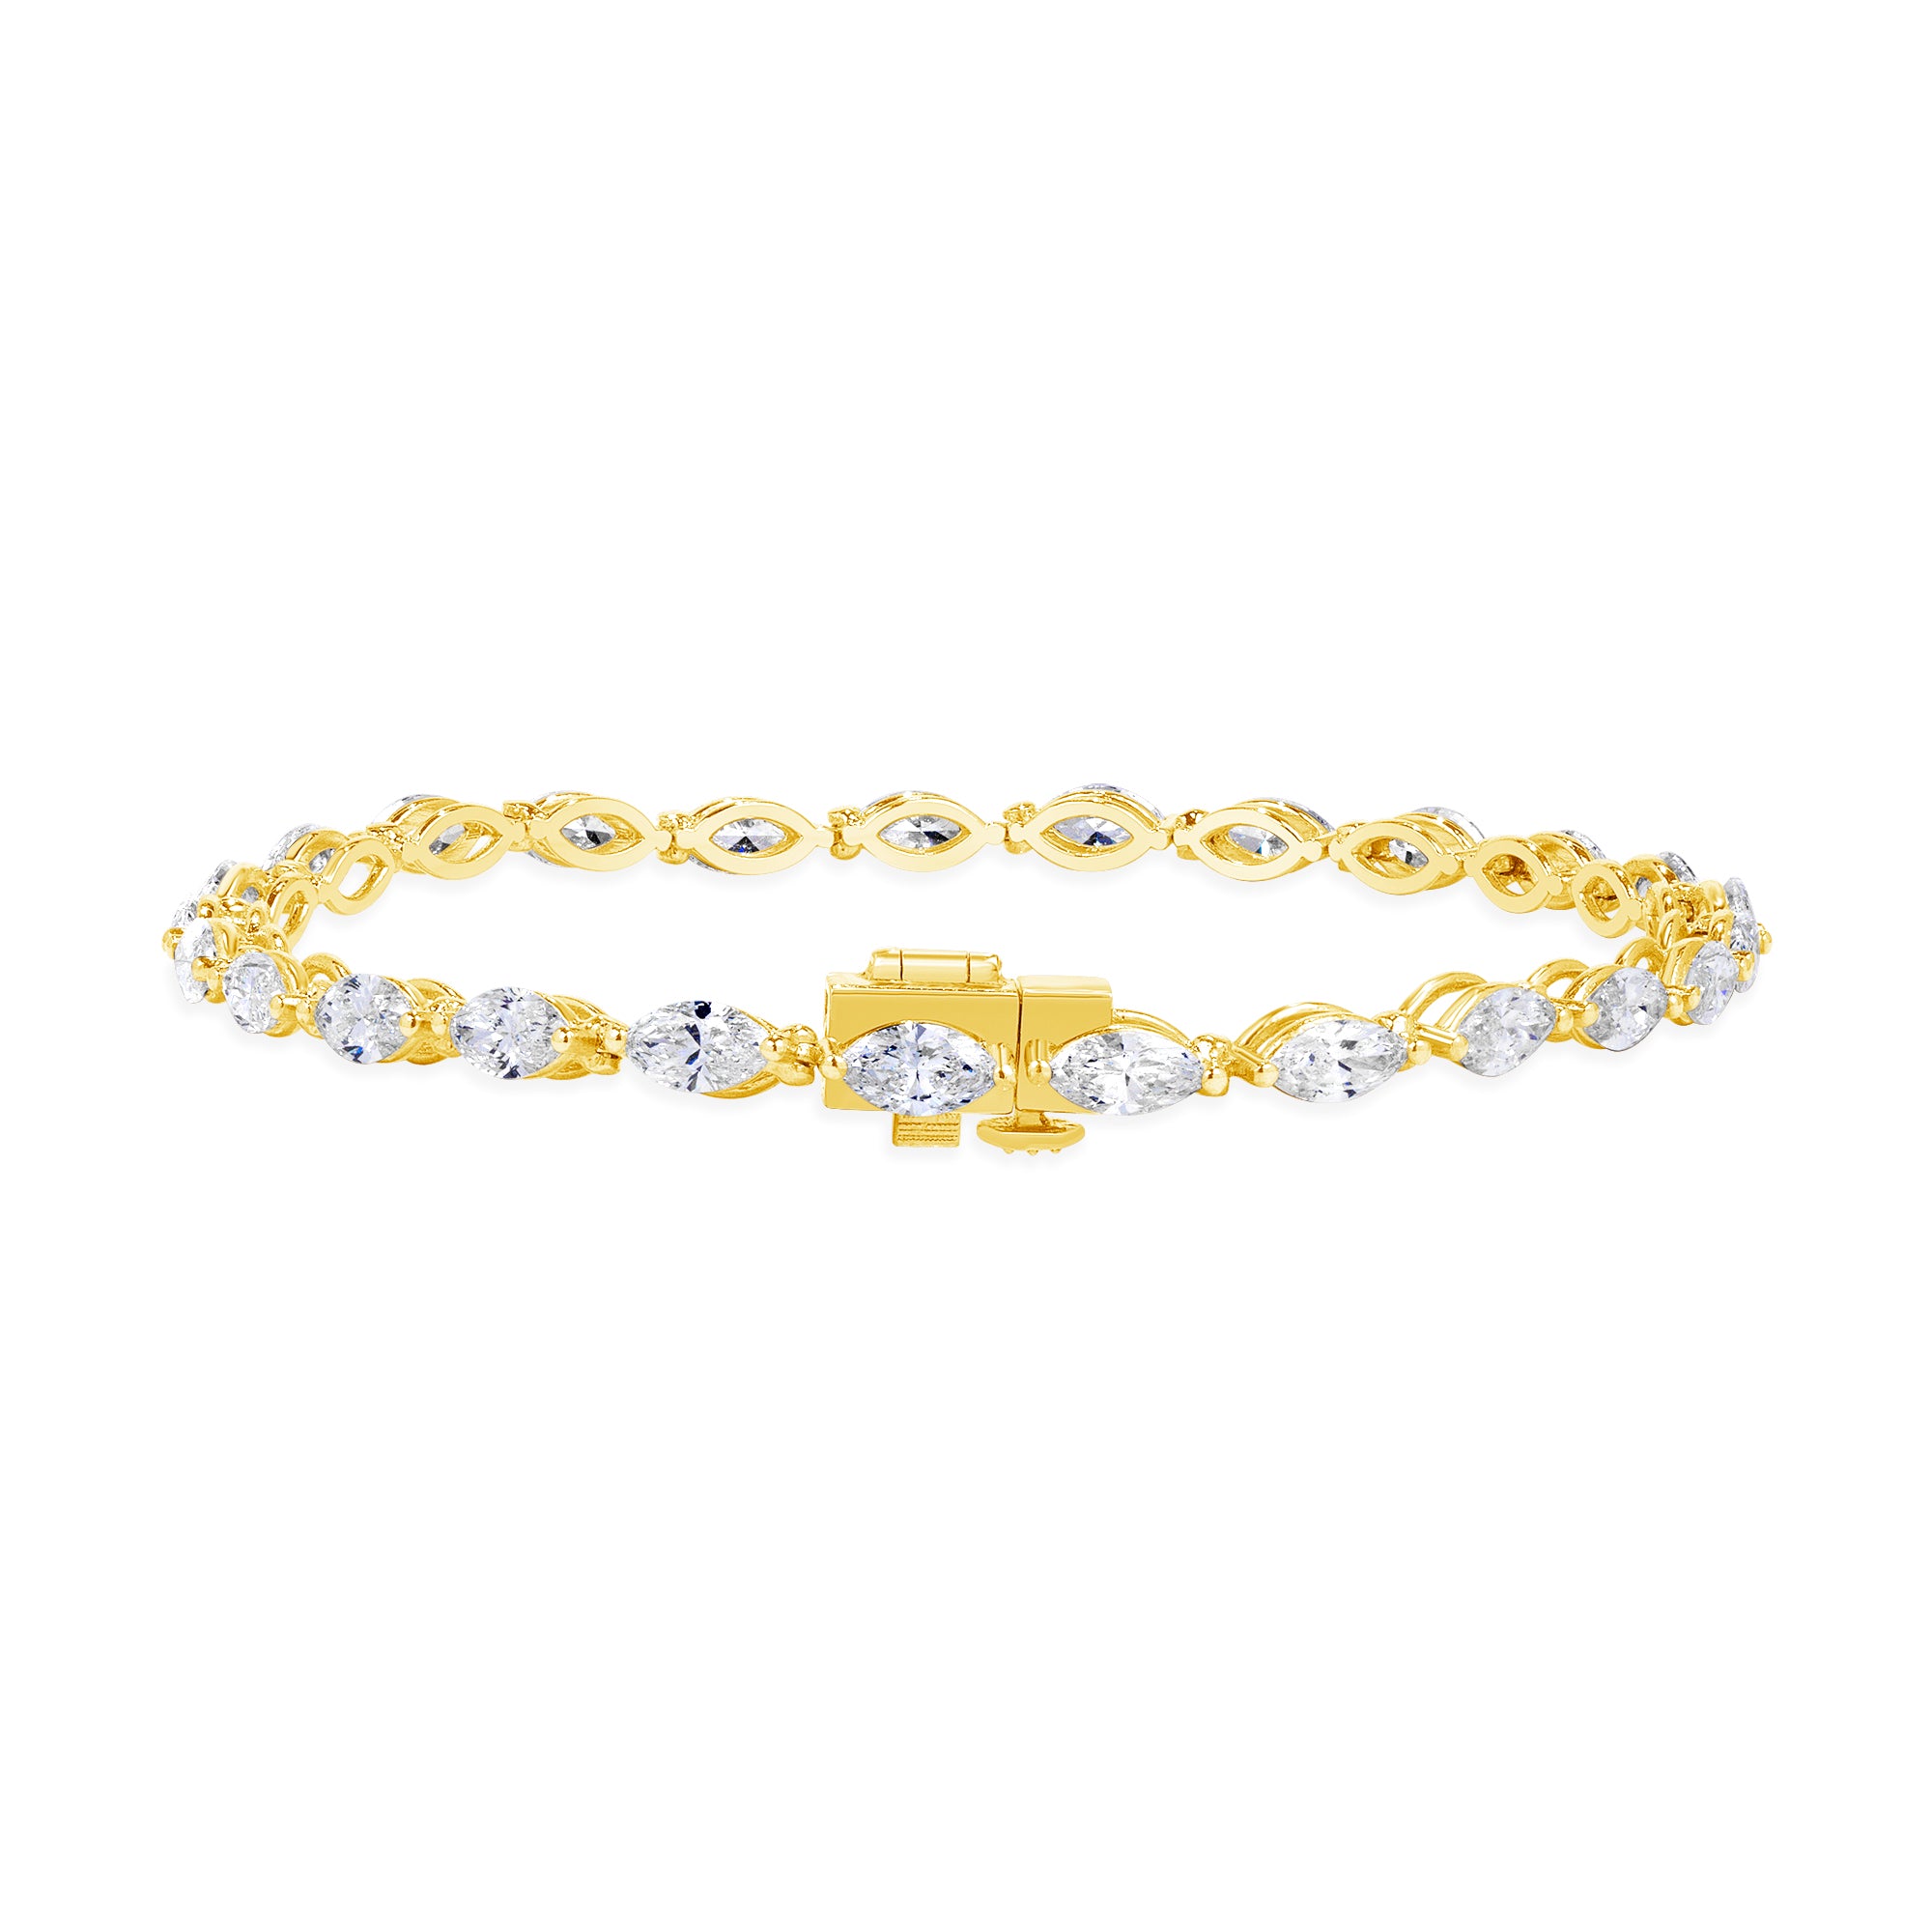 5.00ctw Marquise Cut Diamond Tennis Bracelet in 18K Yellow Gold